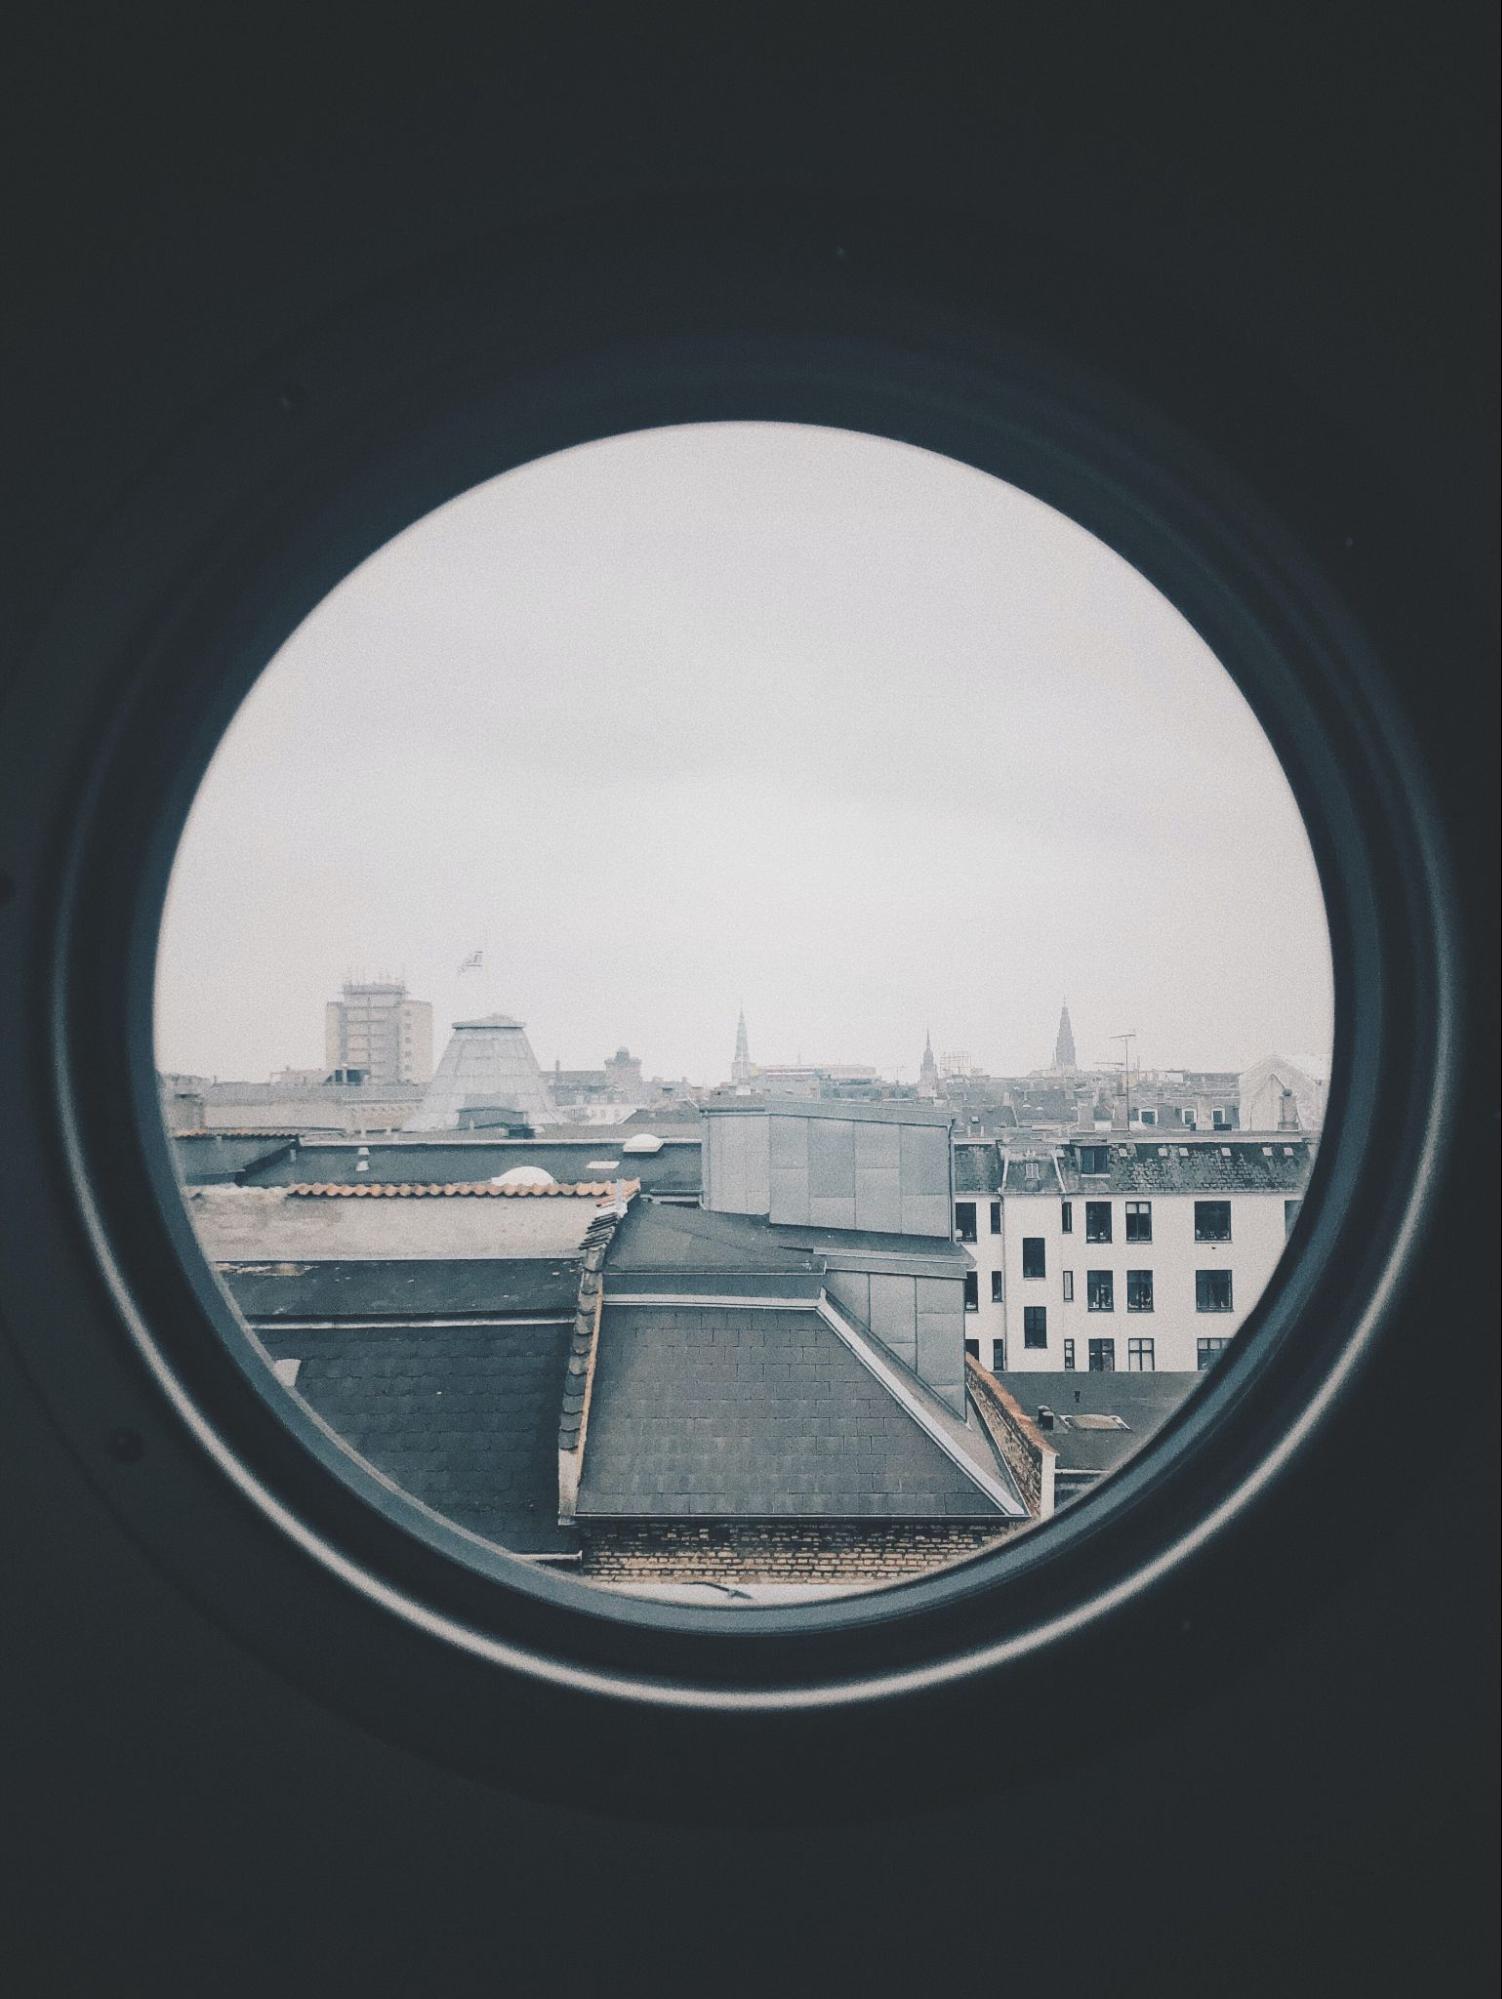 Cityscape through a round window